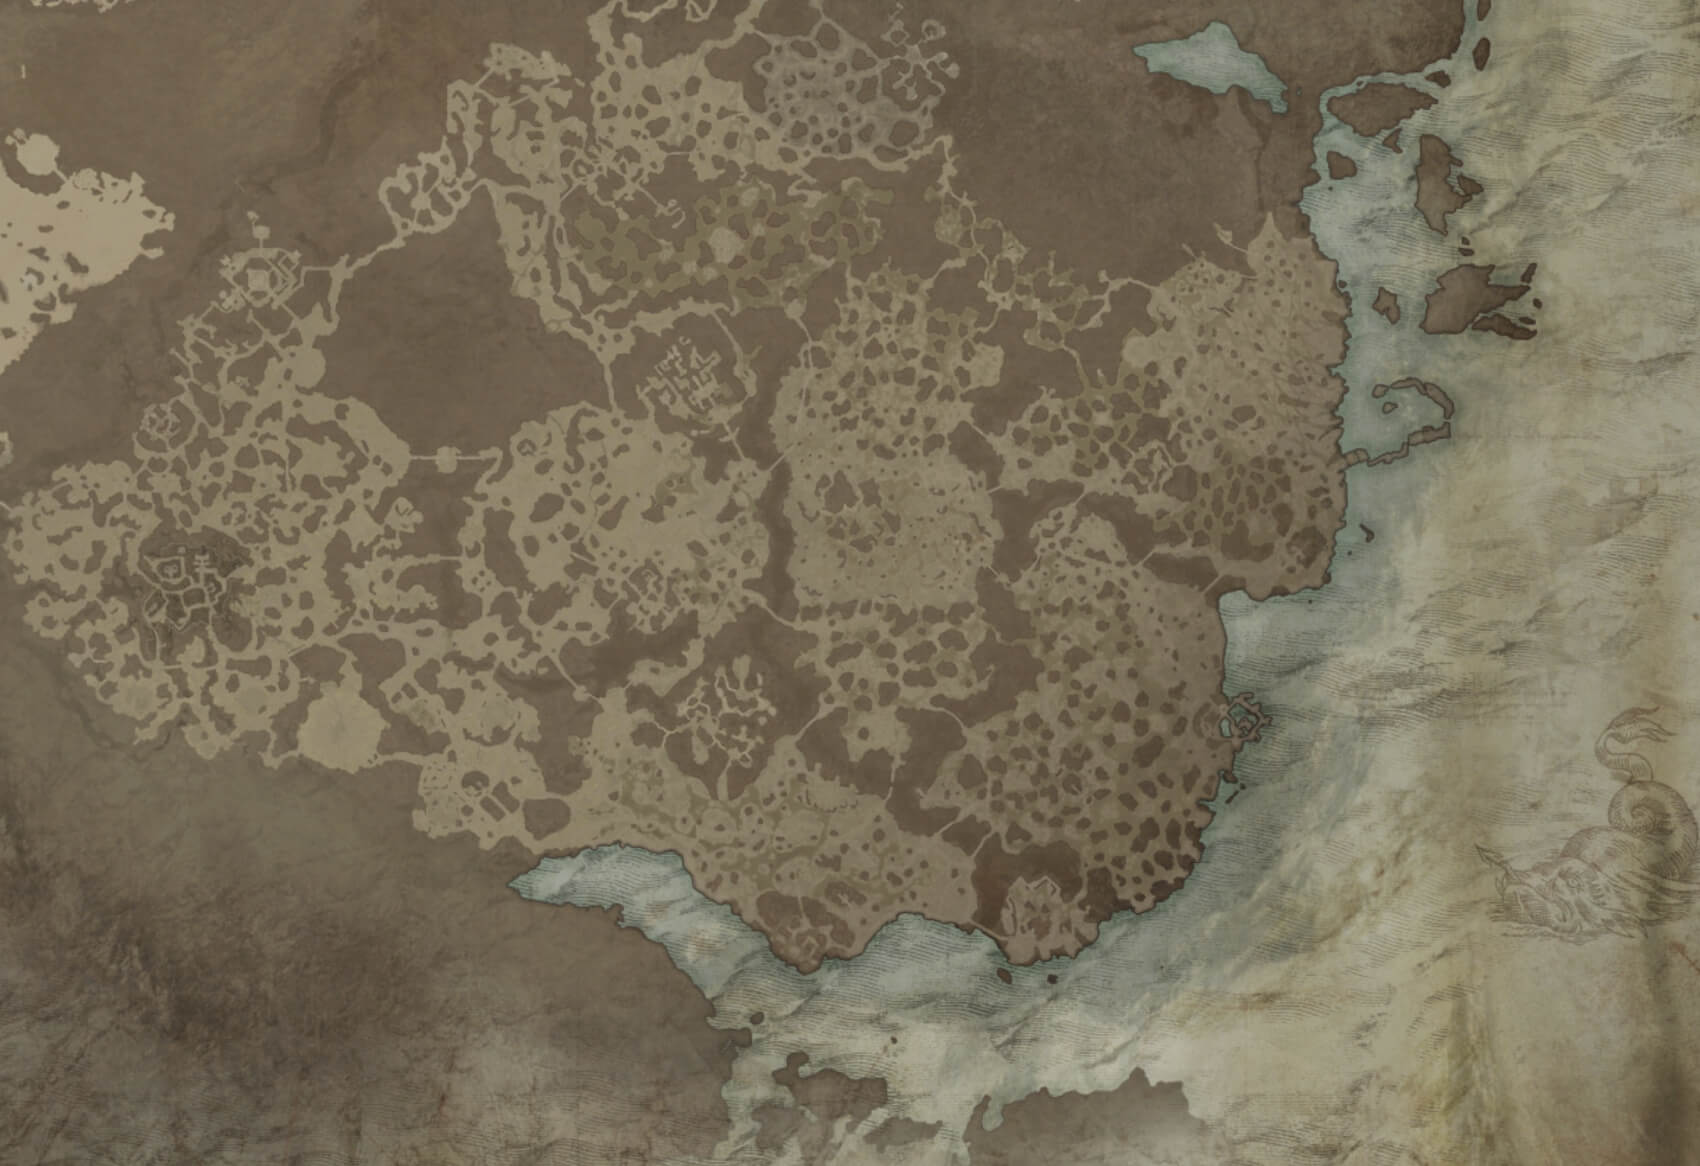 Diablo IV Map Image